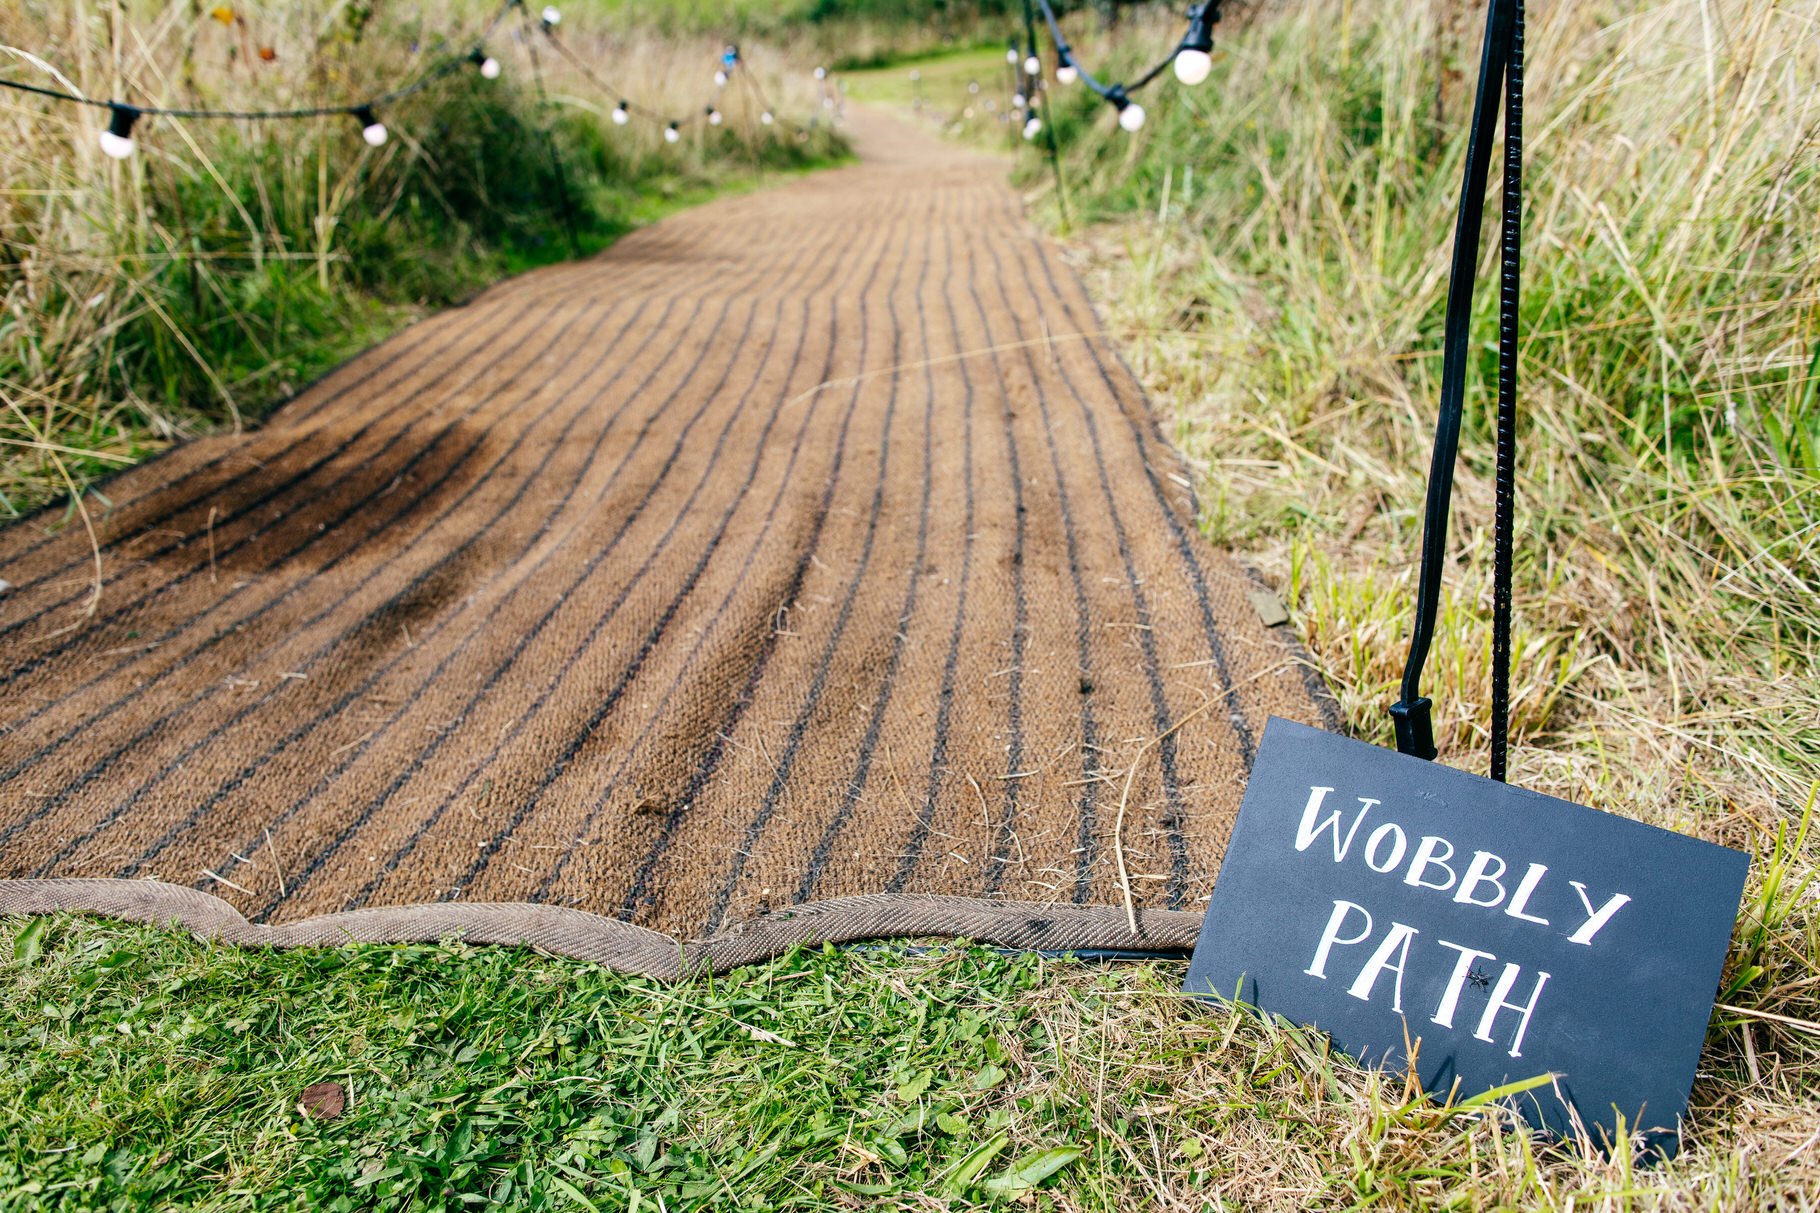 wobbly path with festoon lighting at back garden wedding 